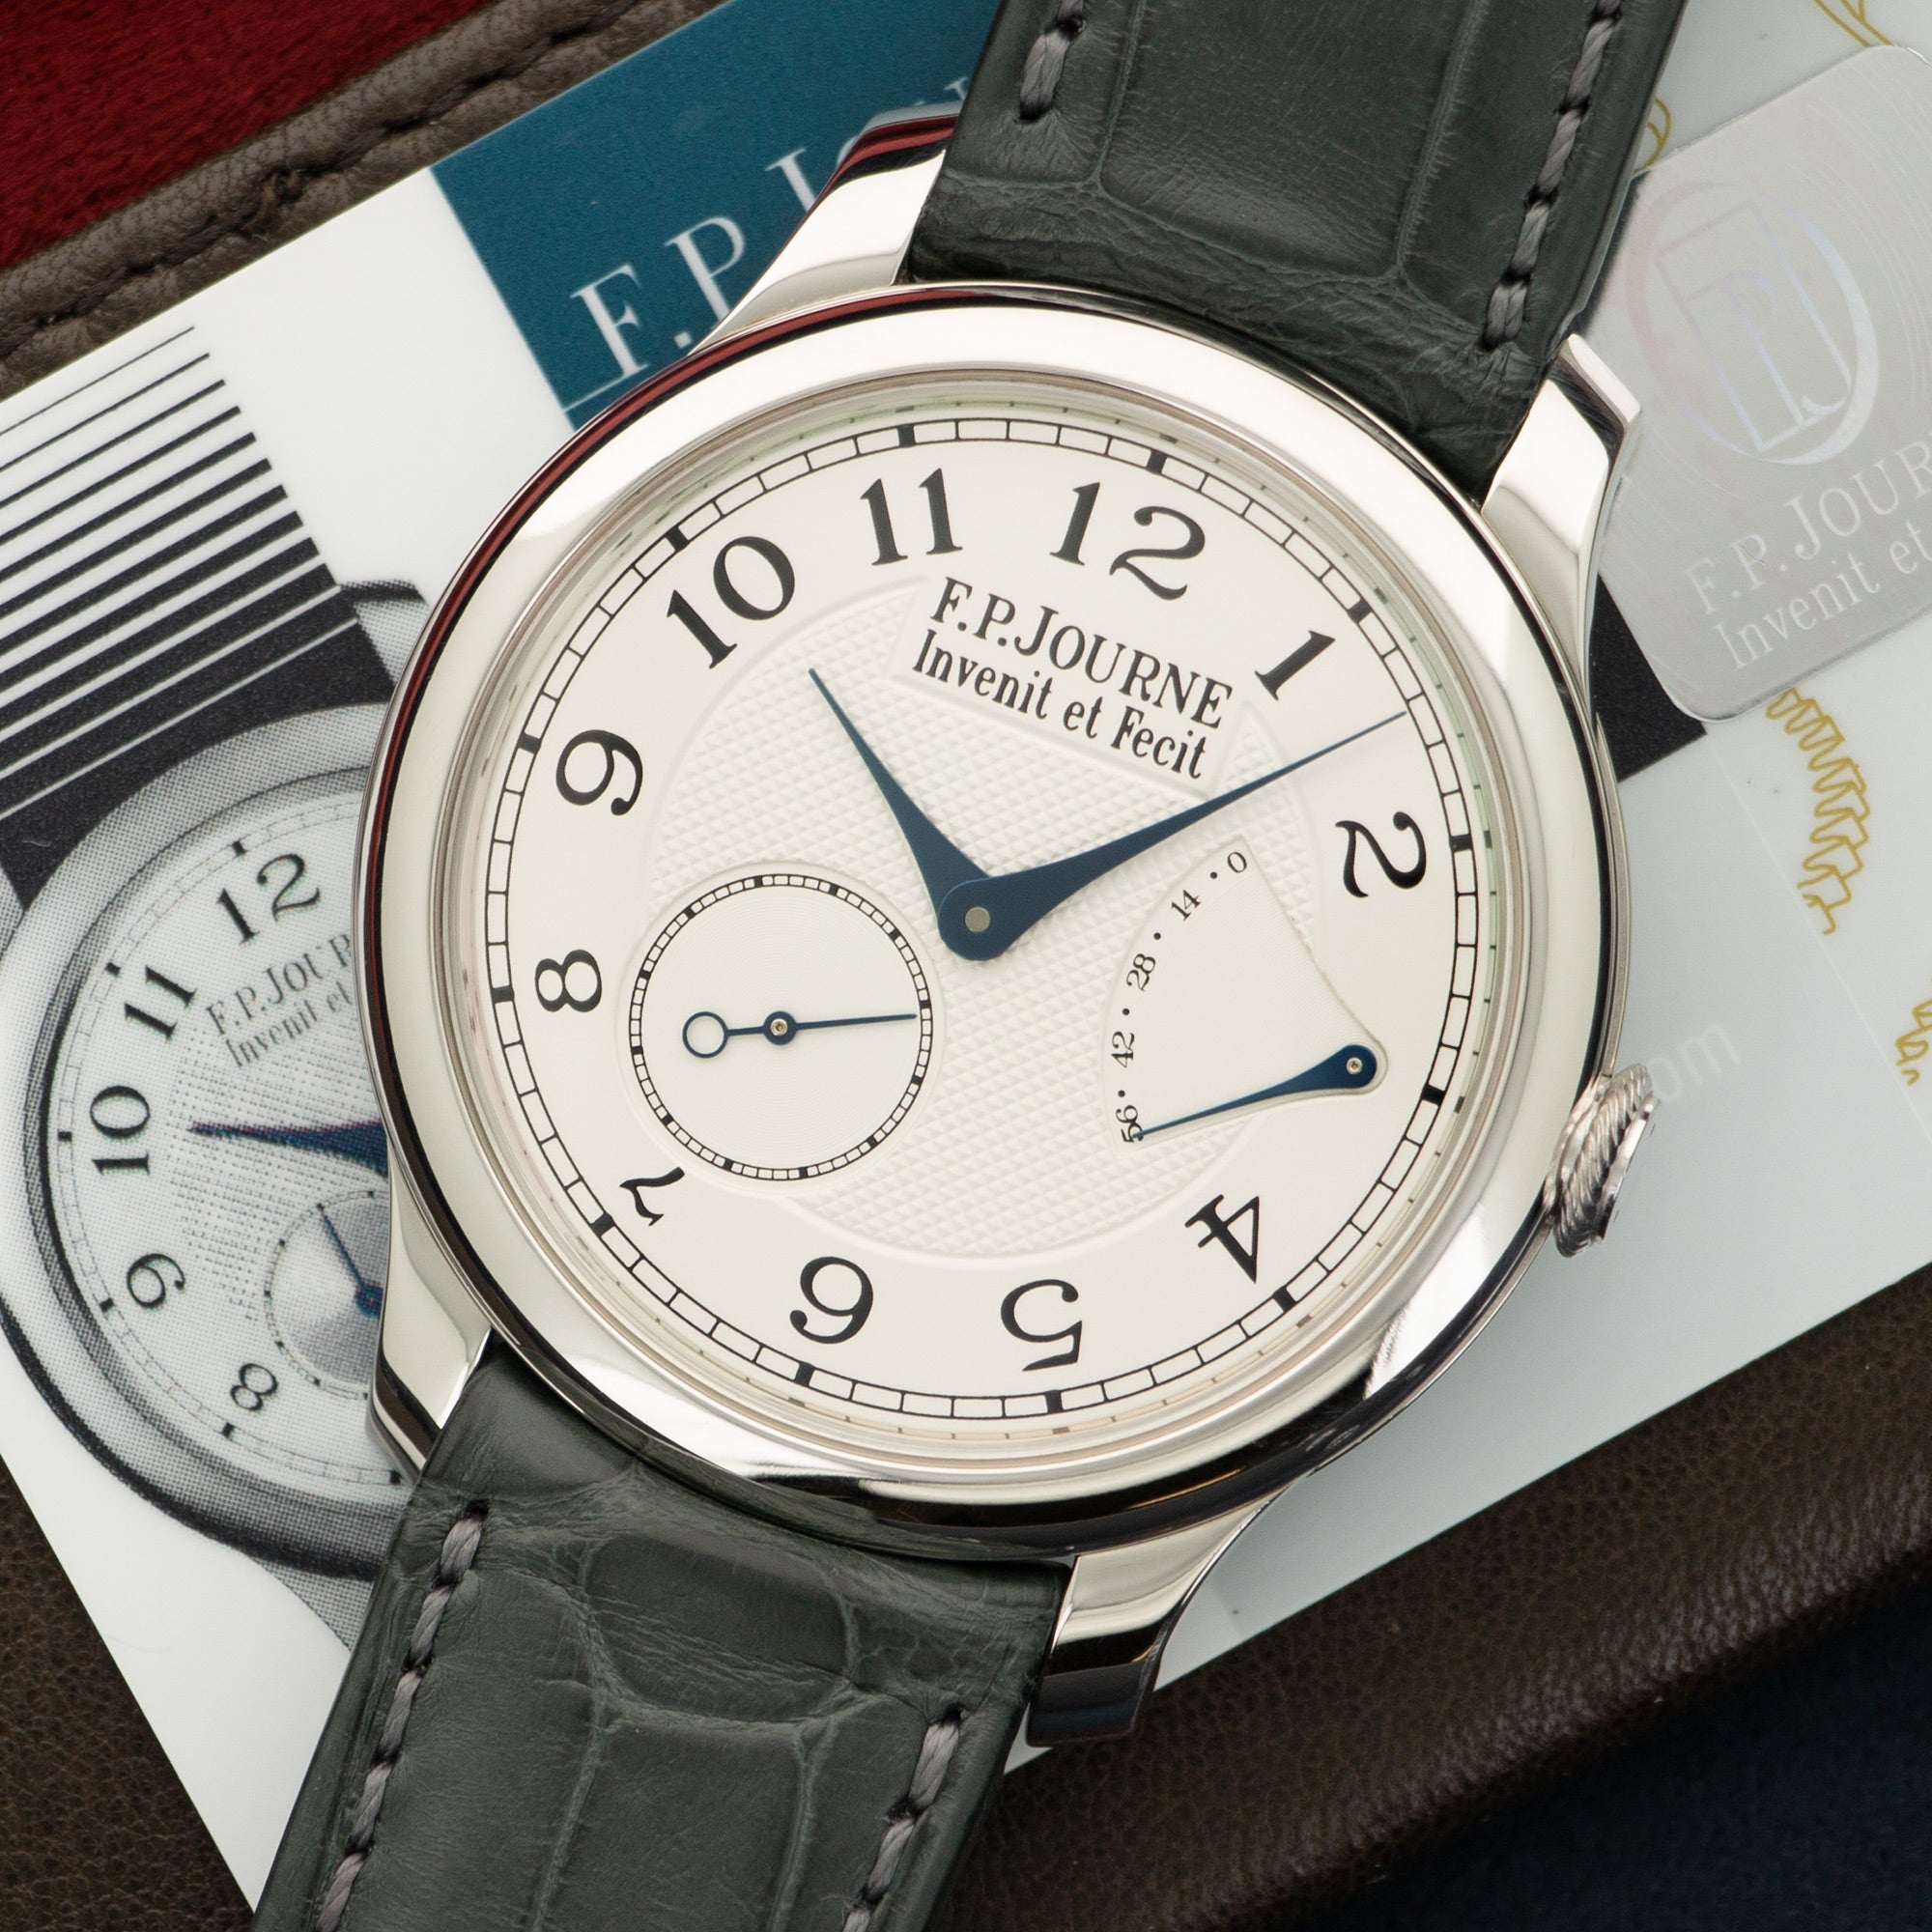 FP Journe - F.P. Journe Platinum Chronometre Souverain Watch - The Keystone Watches